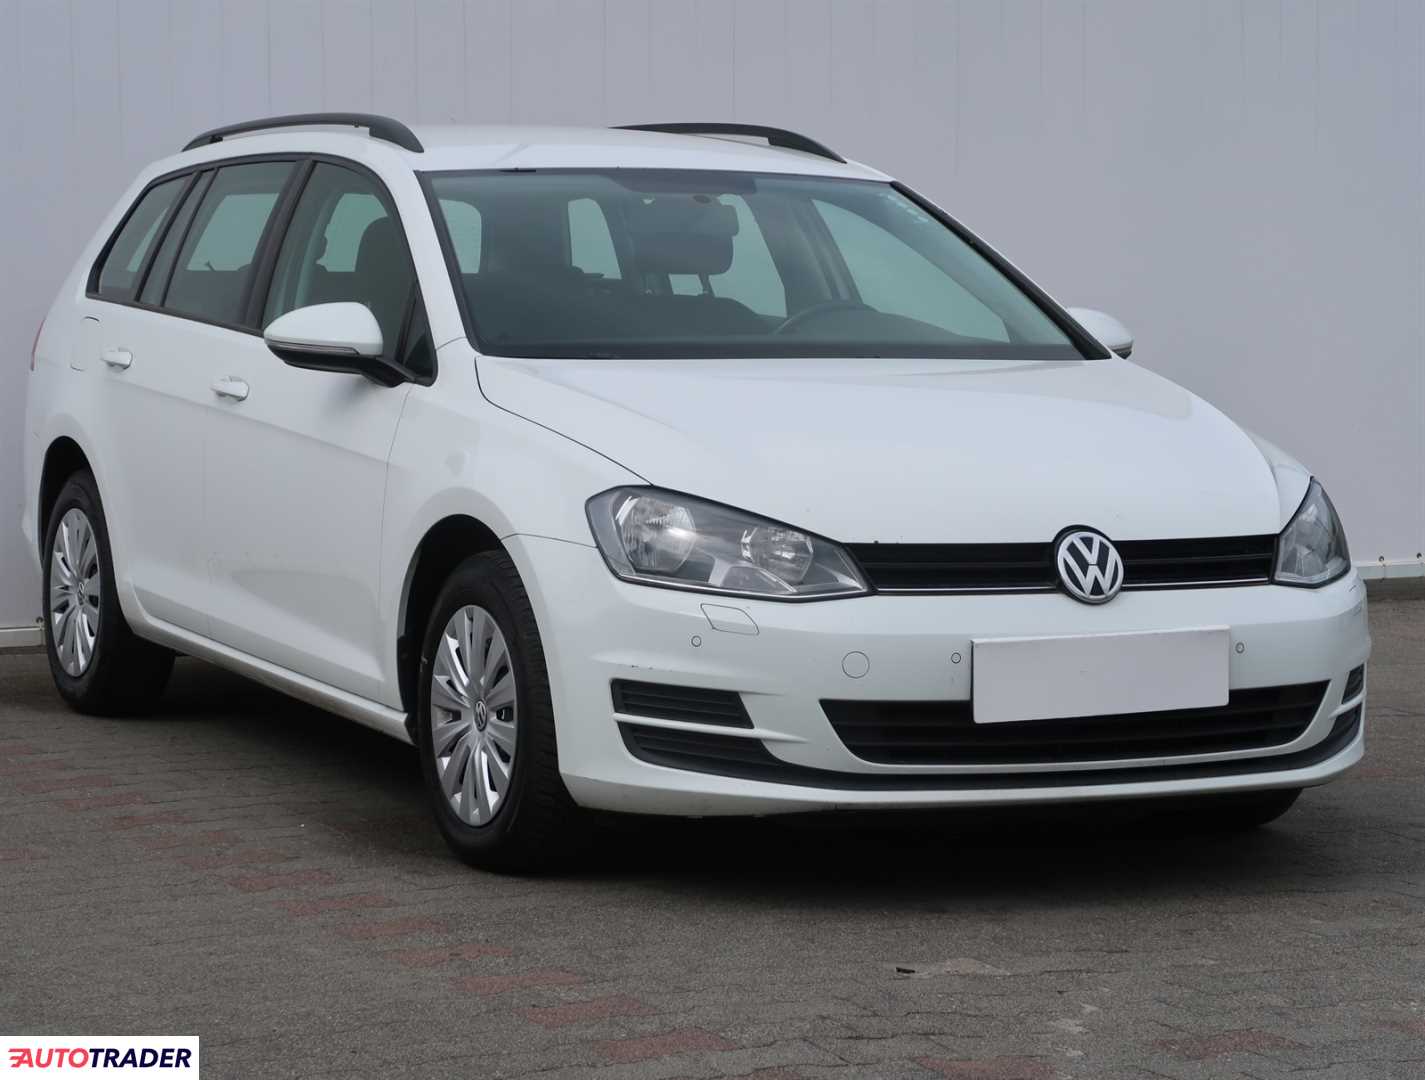 Volkswagen Golf 2016 1.6 108 KM